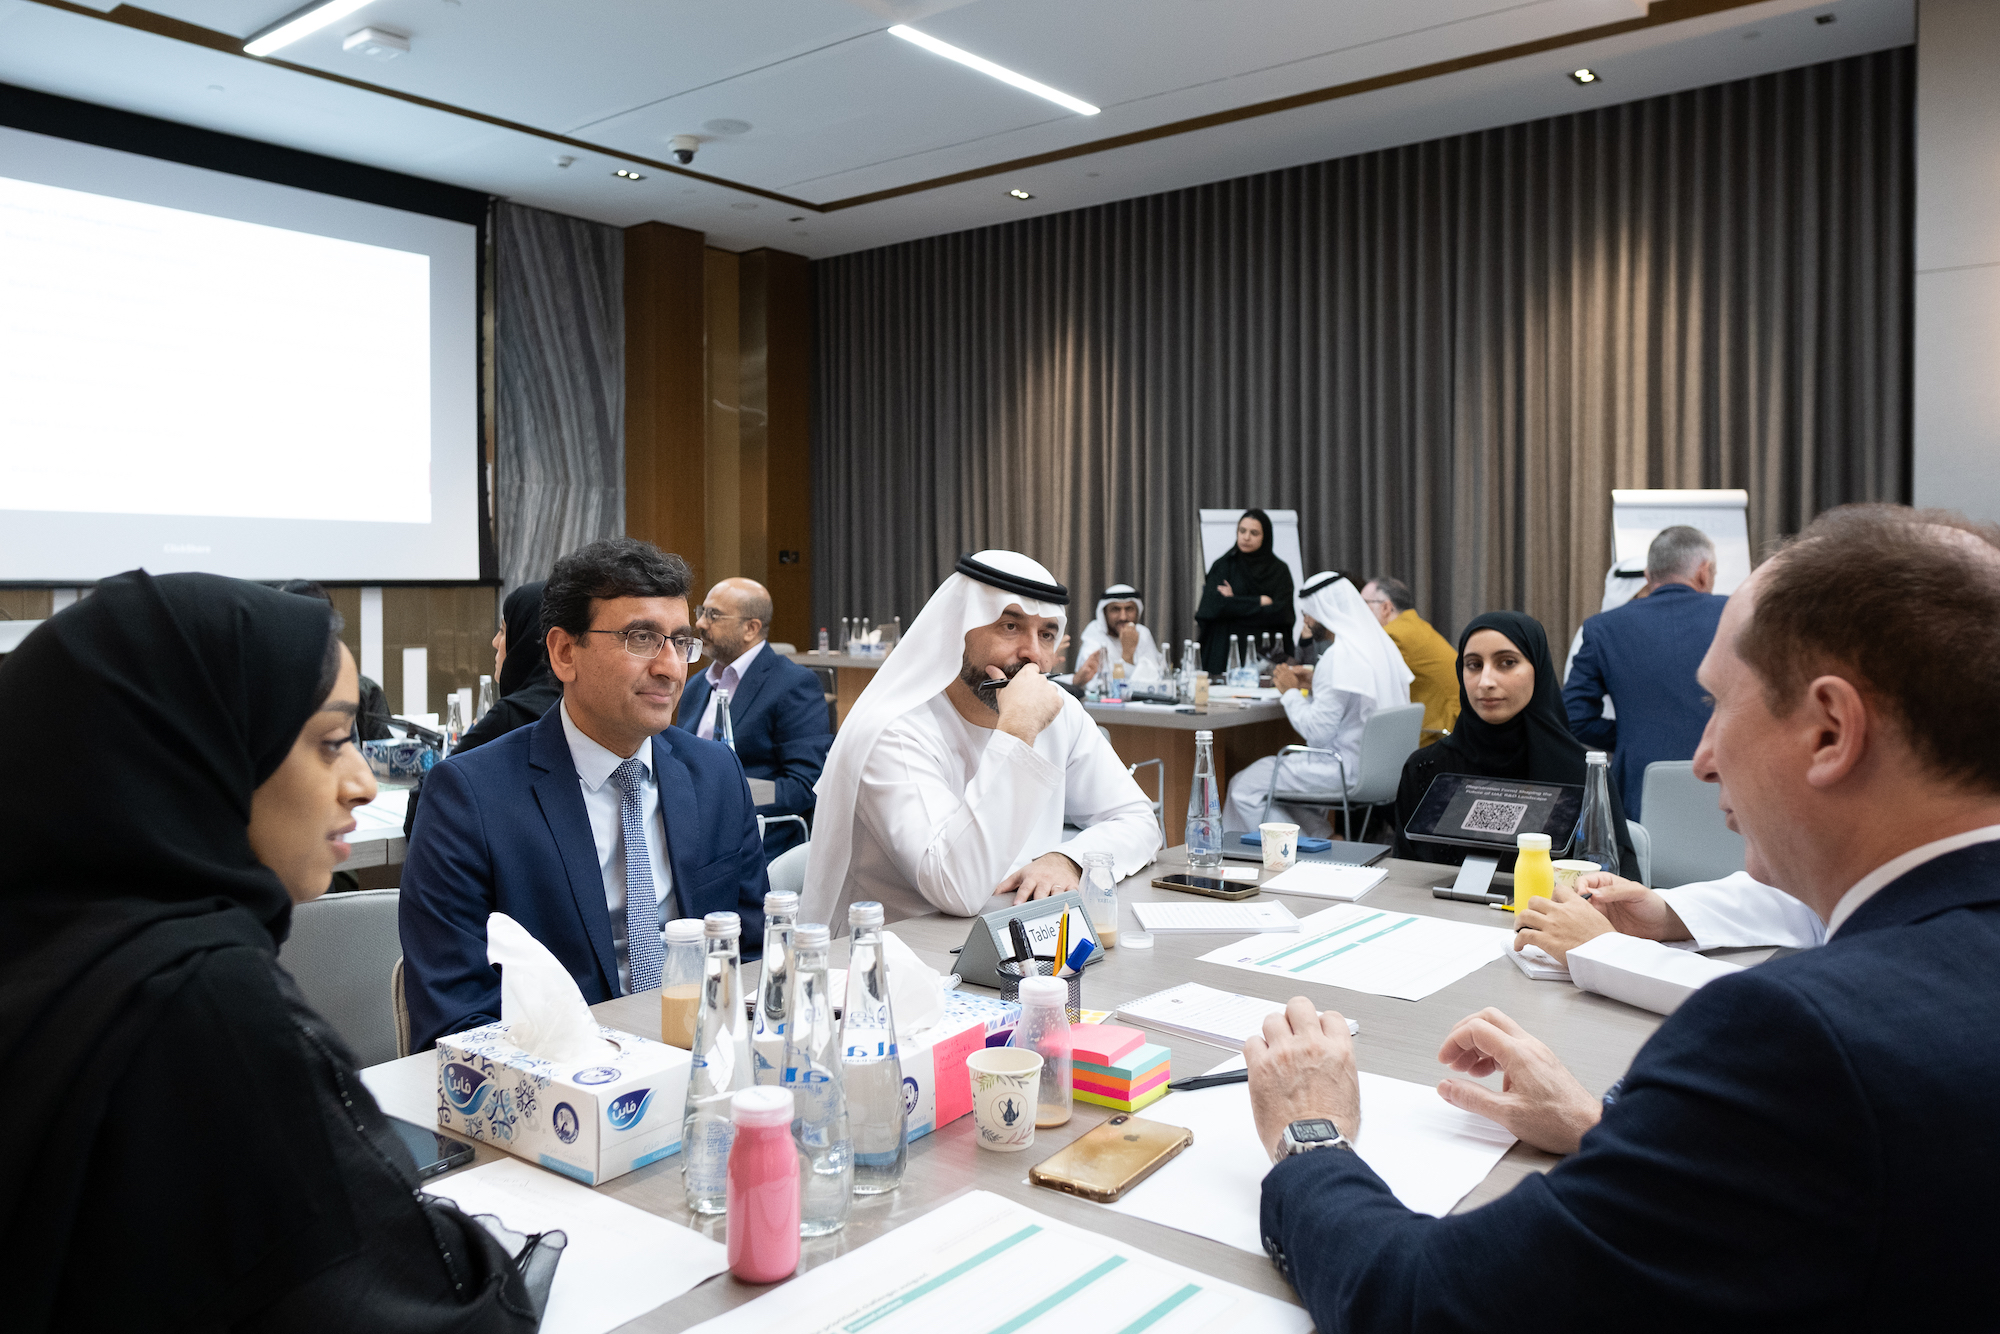 MoIAT and Emirates Research Development Council (ERDC) host workshops to advance the UAE’s R&D landscape. 